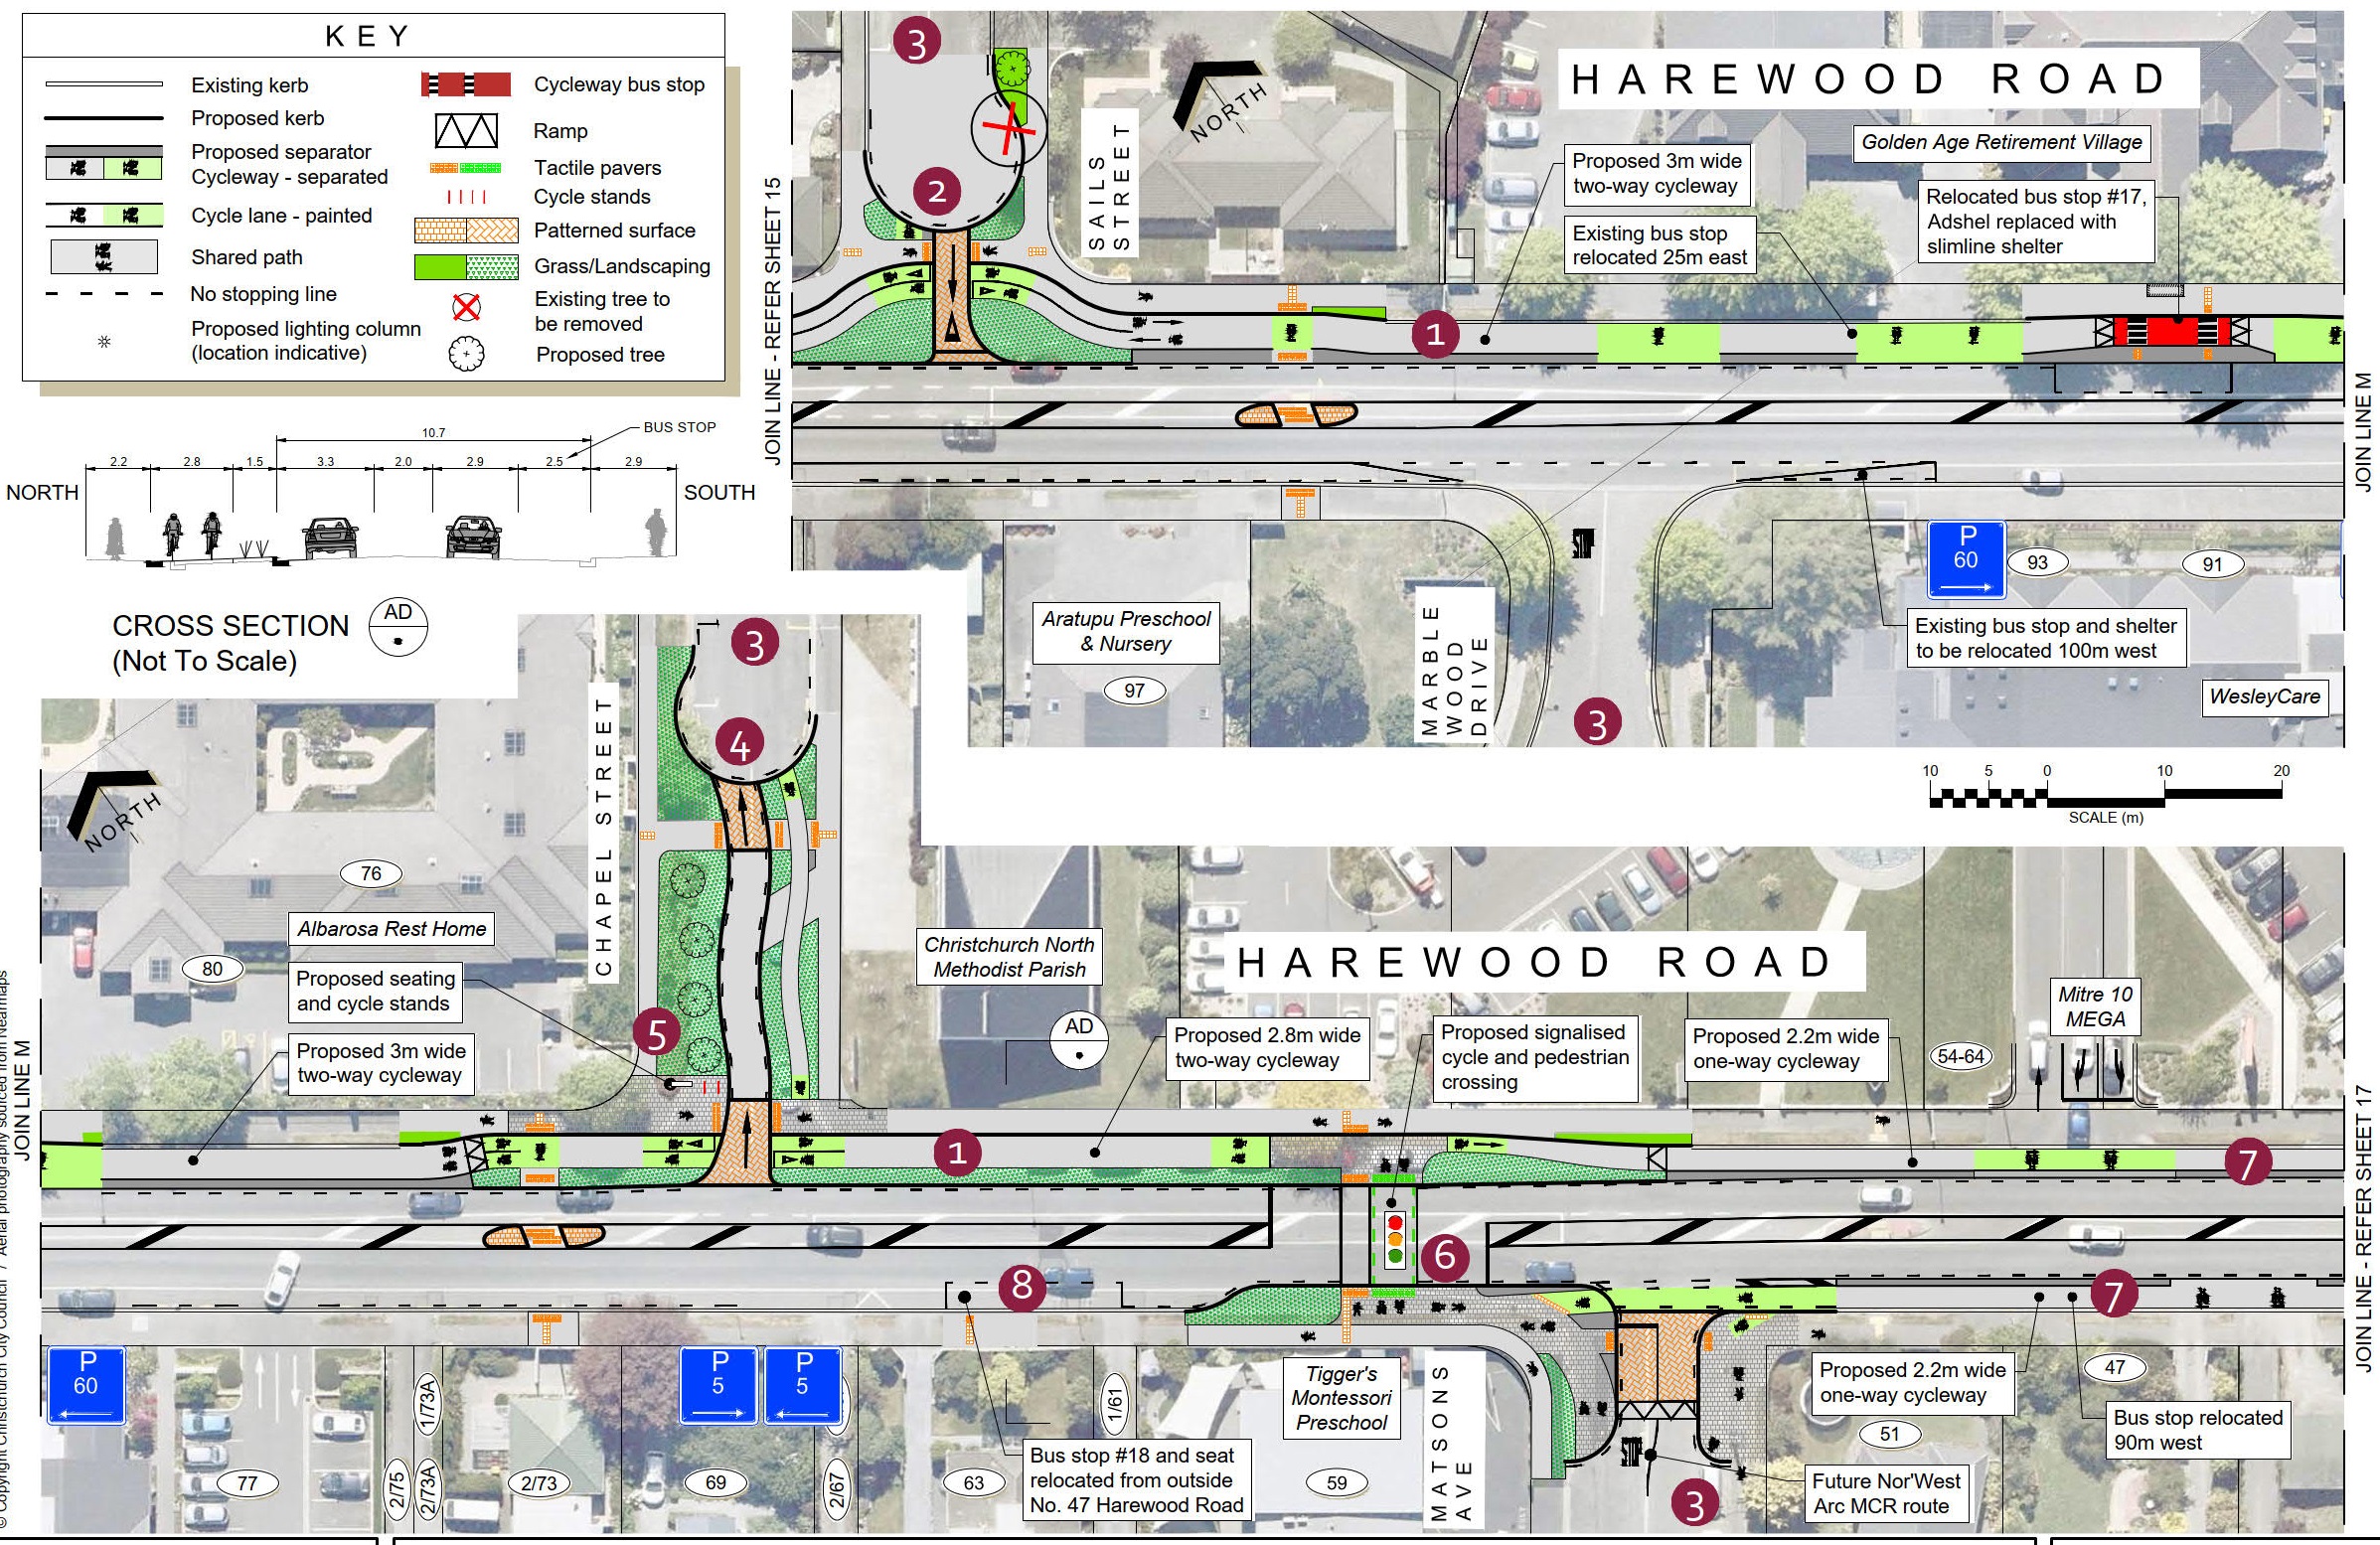 Plan 16 - Harewood Road (Sails Street to Mitre 10 MEGA)